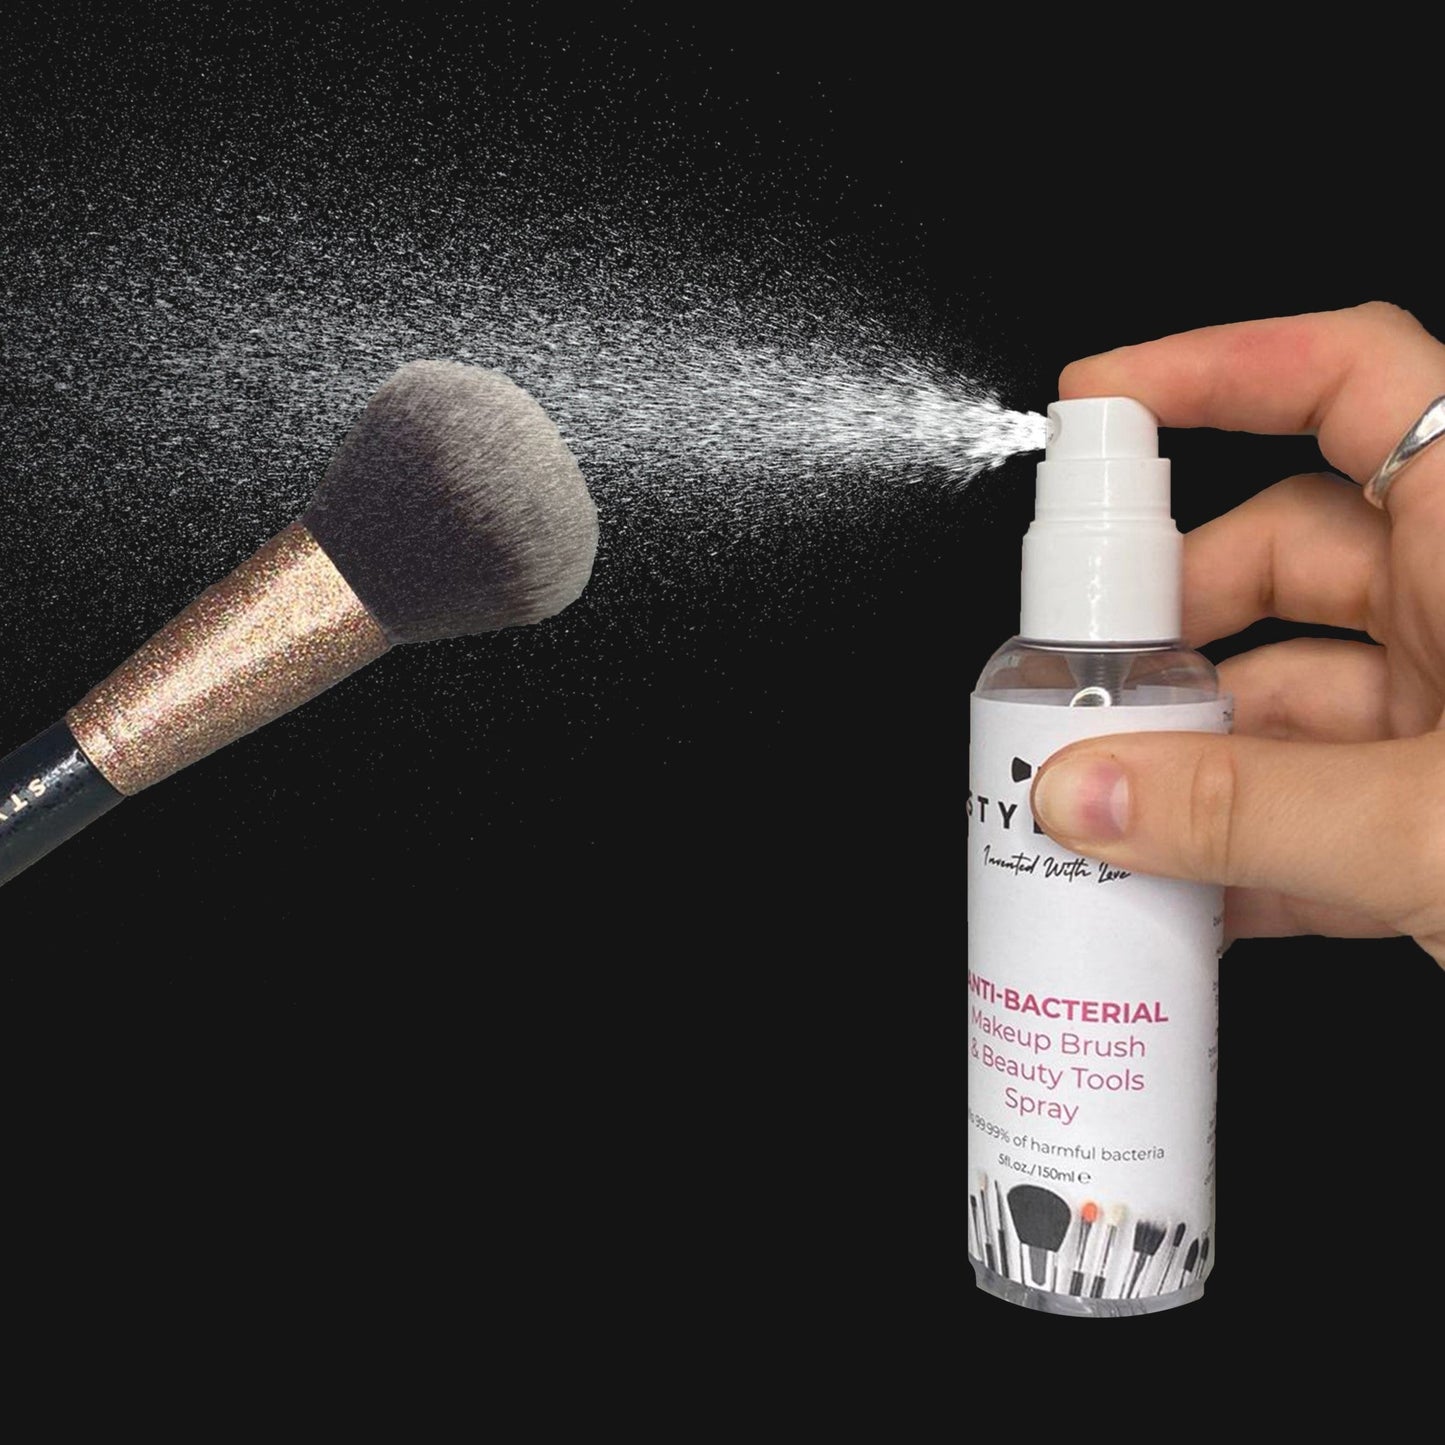 STYLPRO Anti-Bacterial Makeup Brush & Beauty Tools Spray